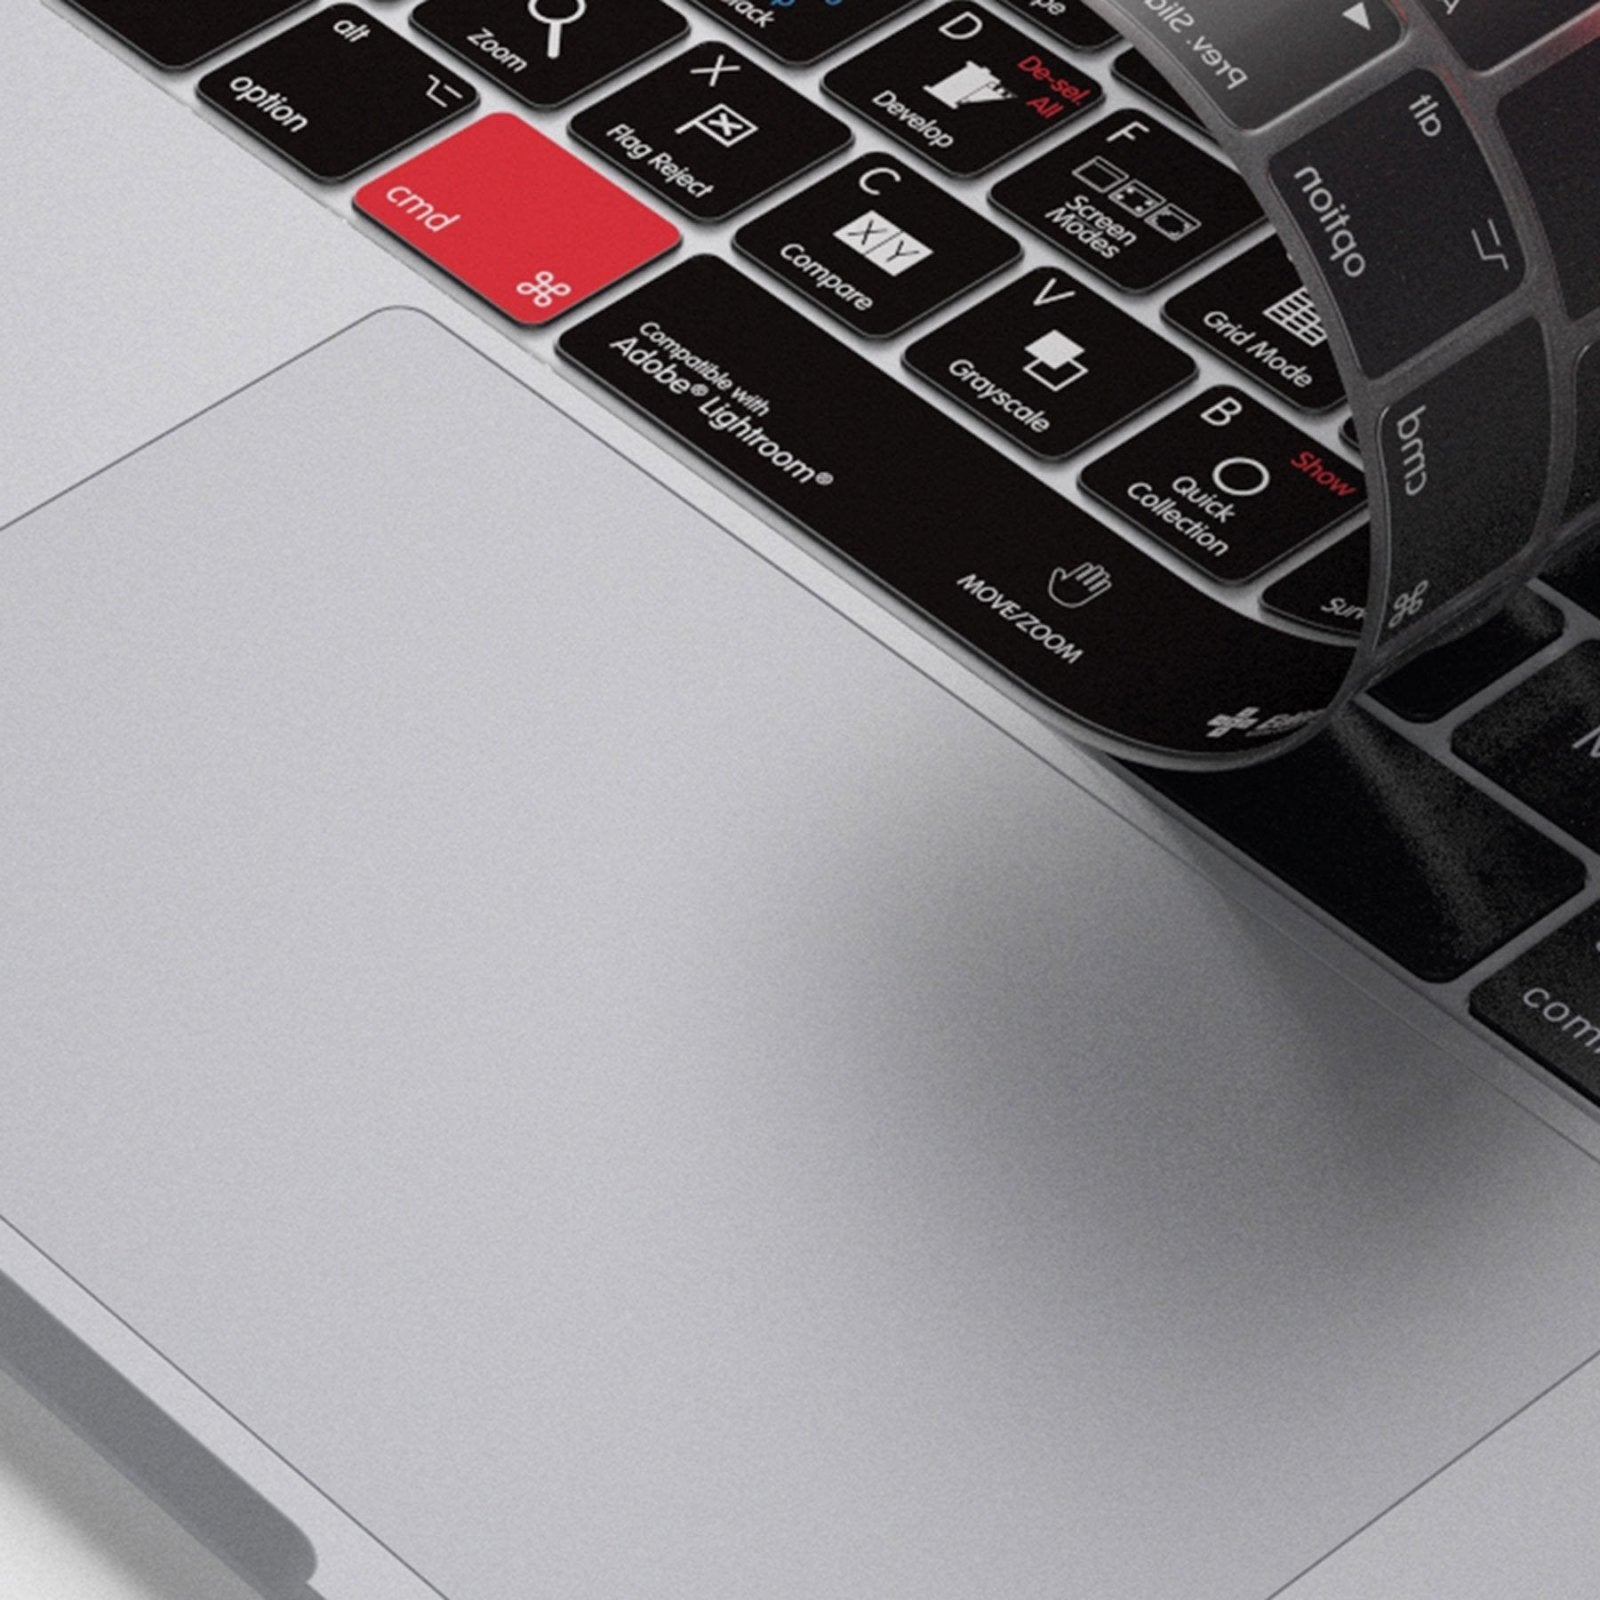 Adobe Lightroom Keyboard Covers for MacBook and iMac - Editors Keys